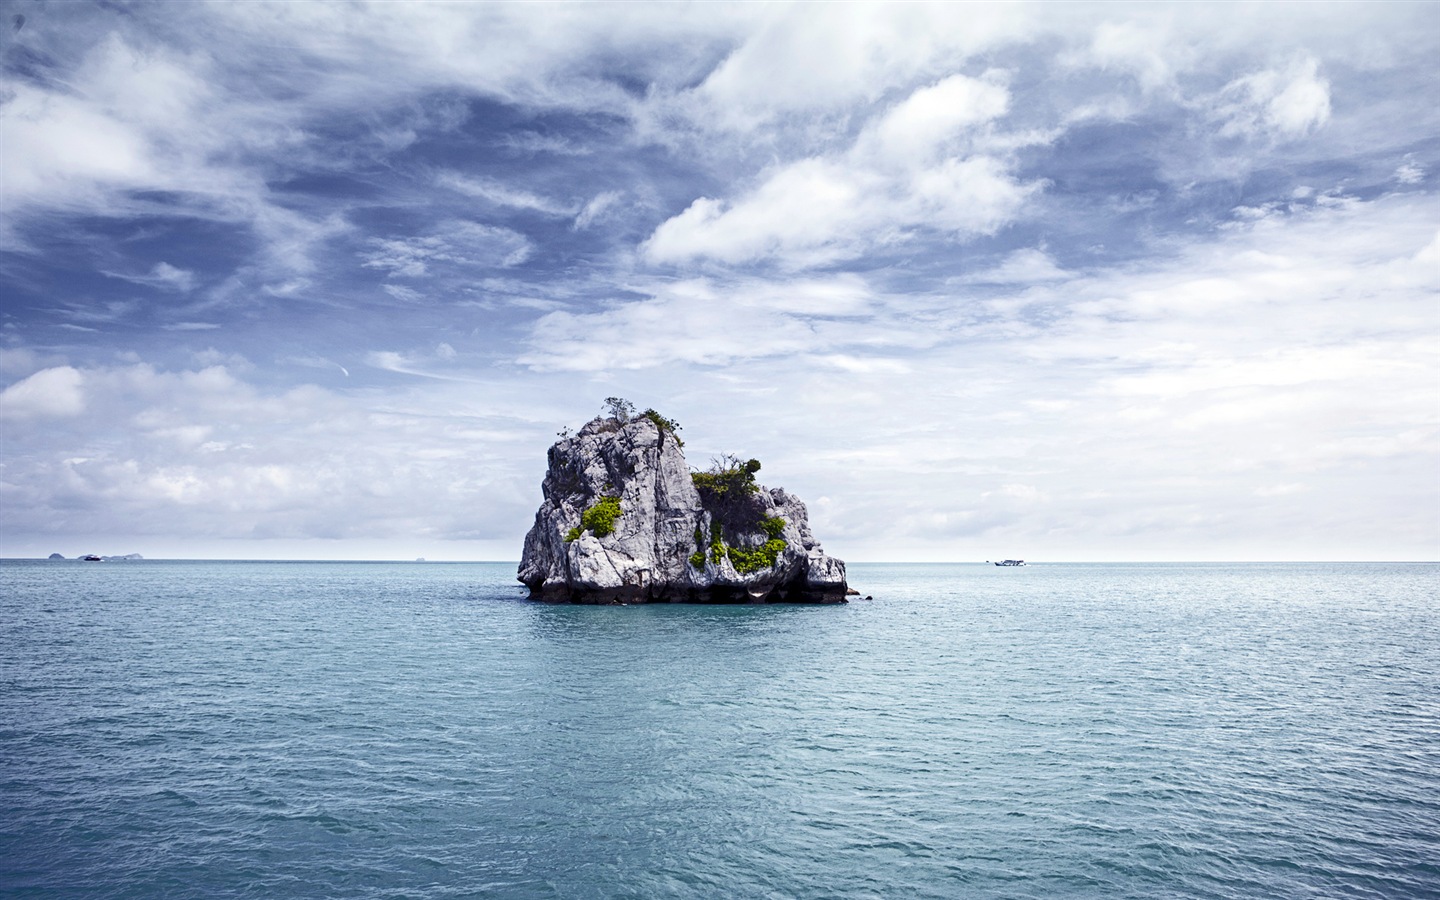 Windows 8 theme wallpaper: beautiful scenery in Thailand #12 - 1440x900